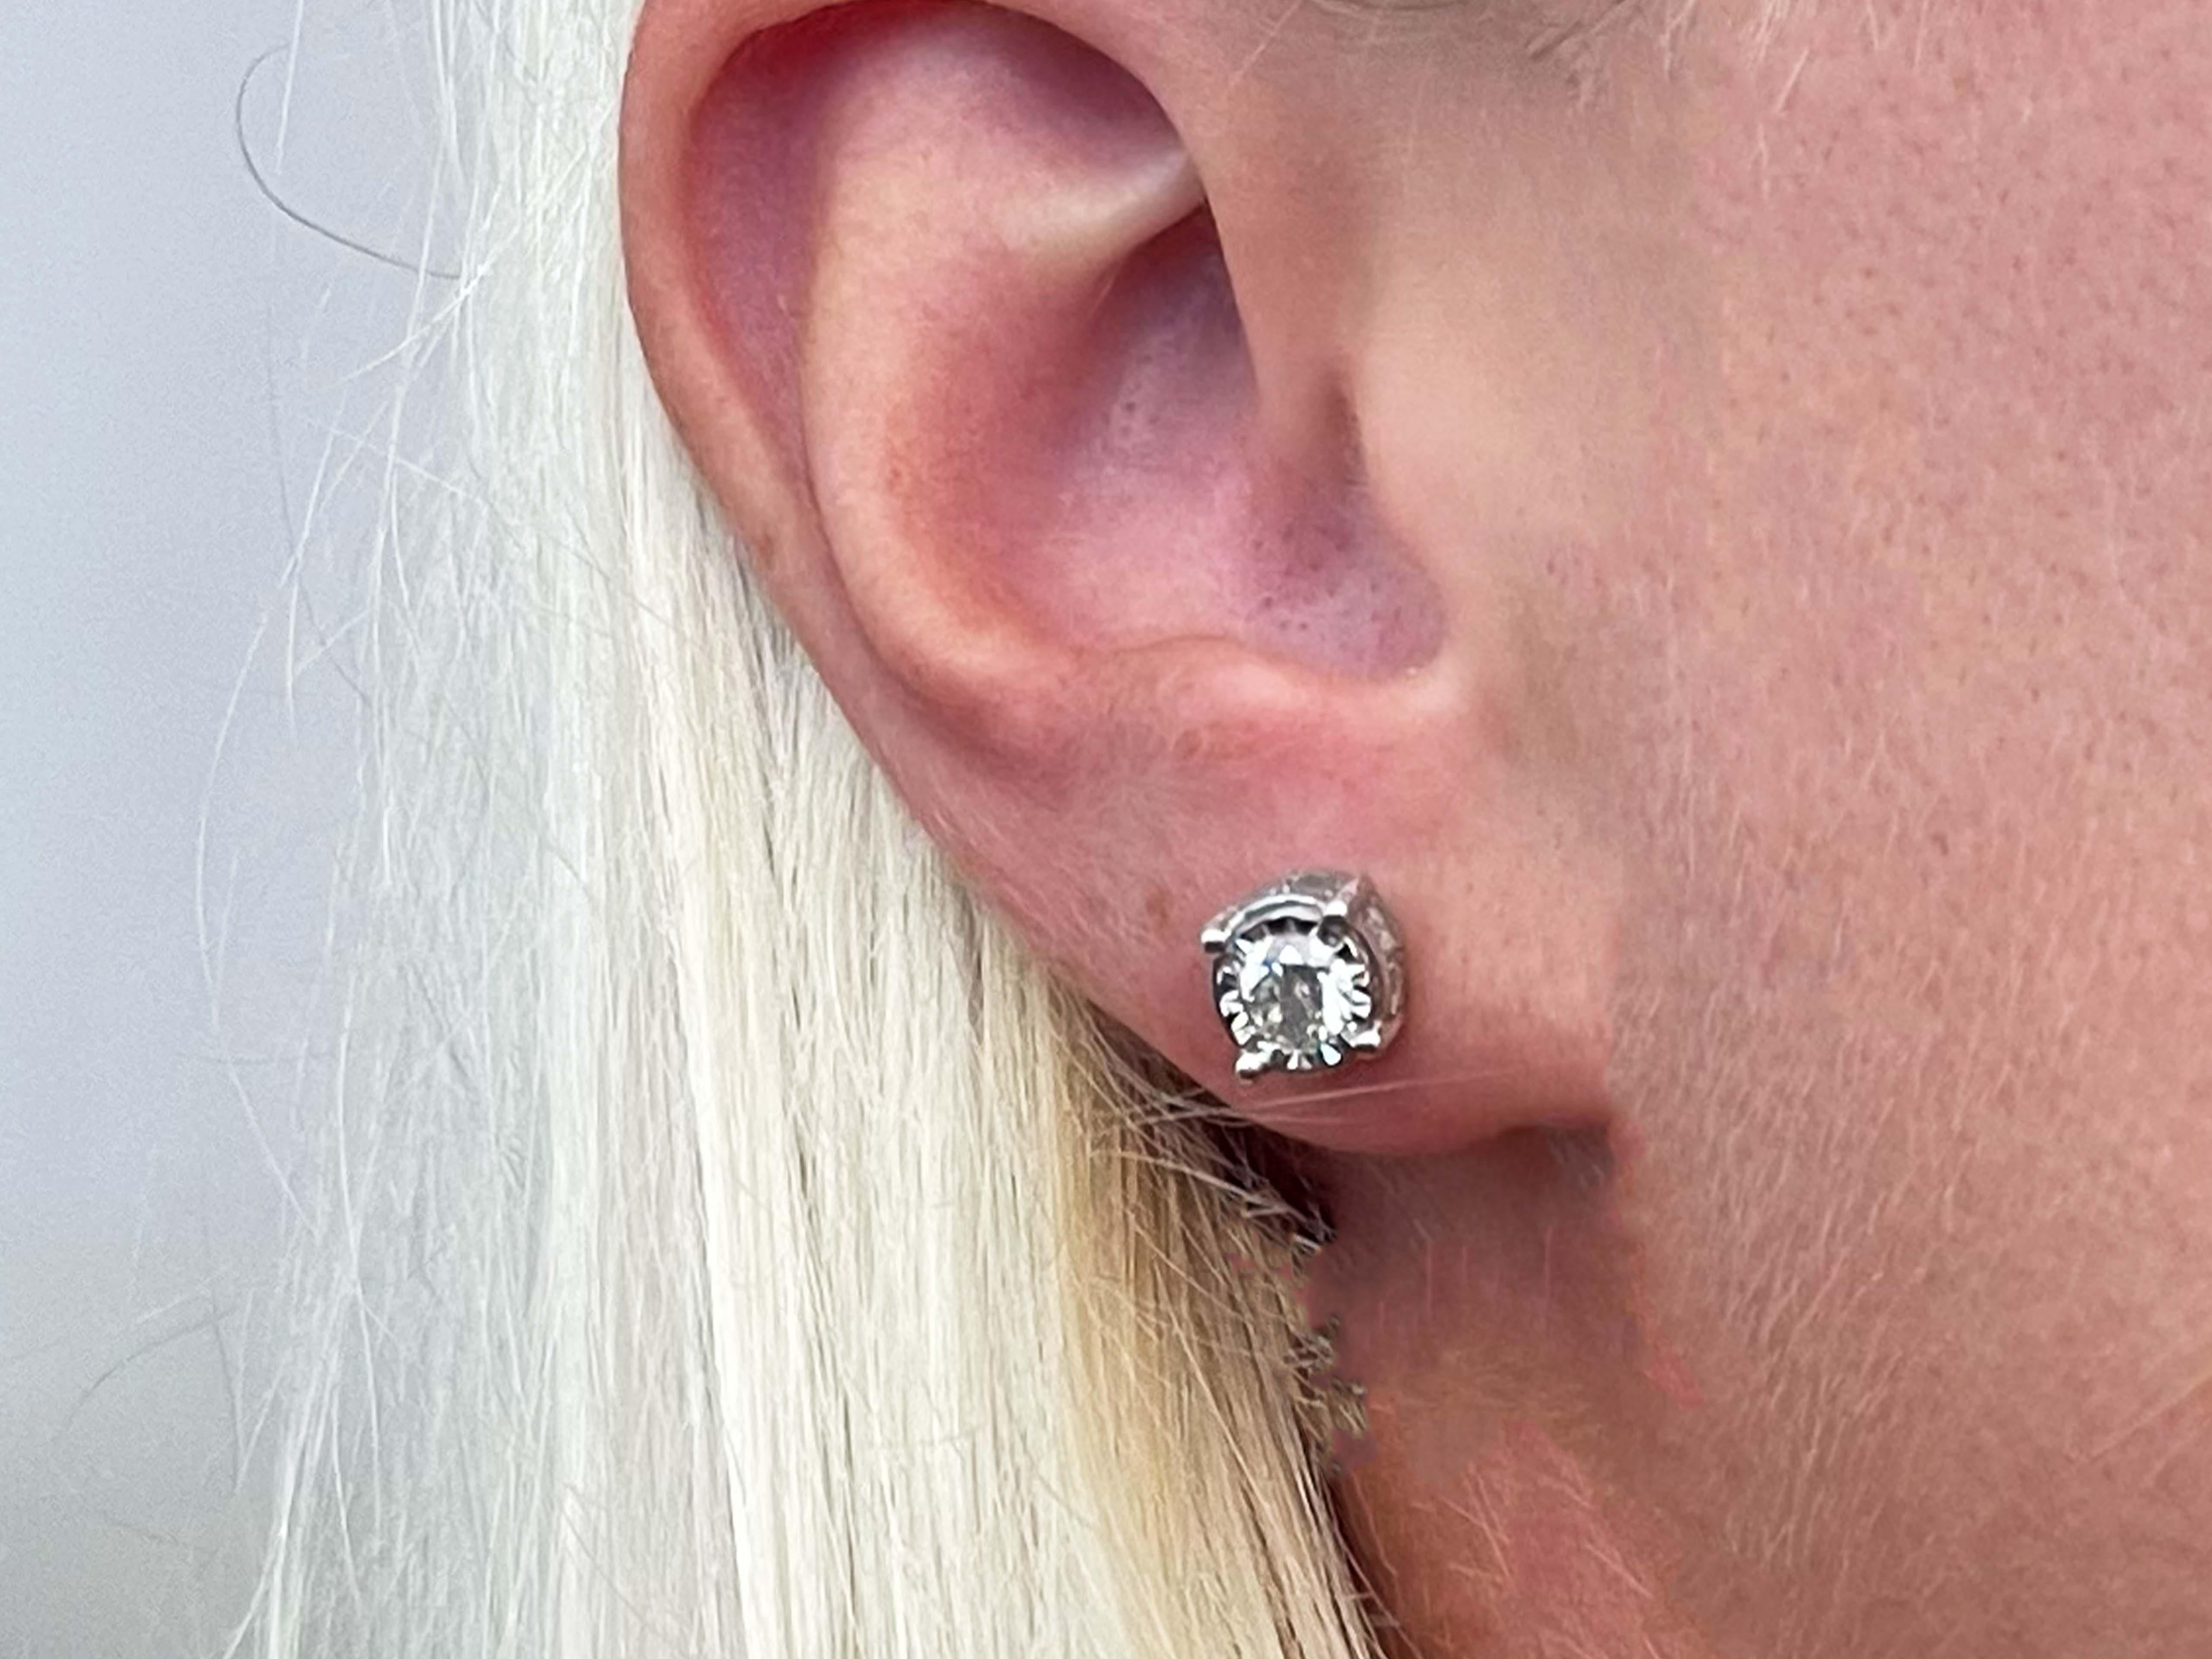 Earrings Specifications:

Metal: 14k White Gold

Earring Diameter: 7.36 mm

Total Weight: 2.8 Grams

Diamonds: 18

Center Diamond Color: H-I

Center Diamond Clarity: SI2

Total Diamond Carat Weight: ~1.00 carats

Condition: Preowned

Stamped: 